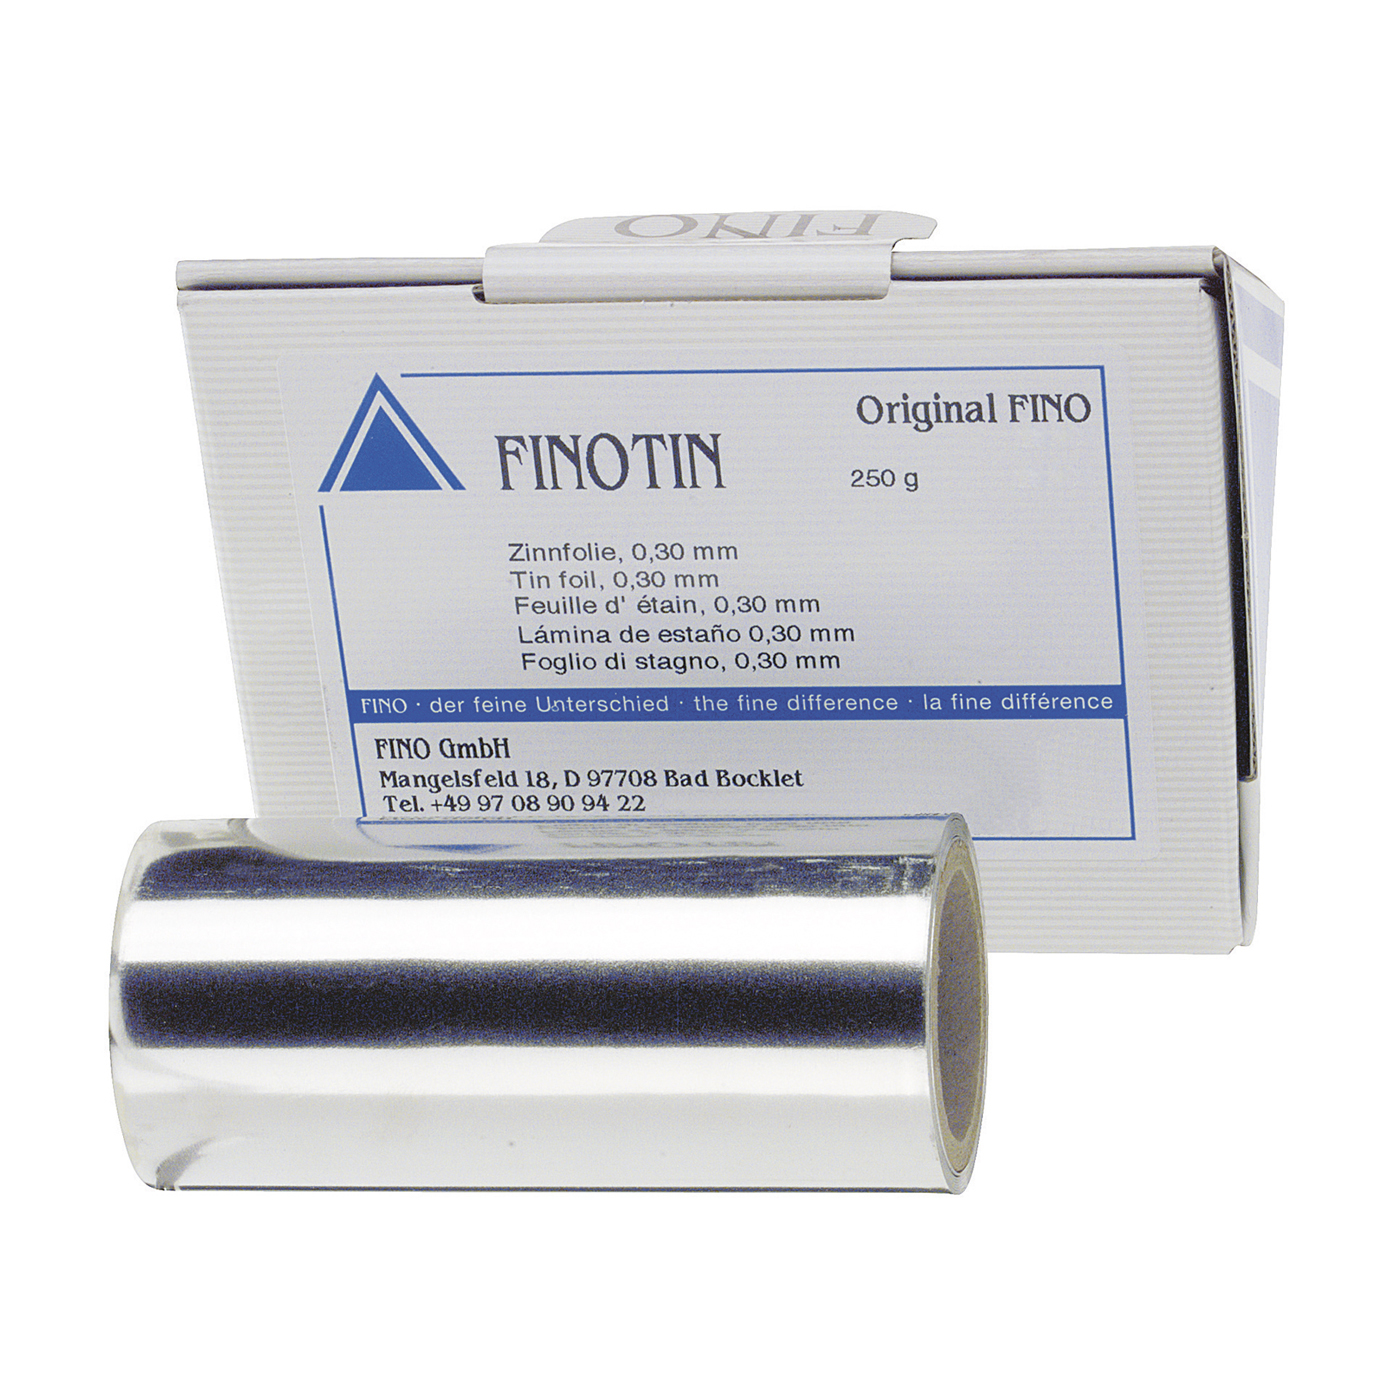 FINOTIN Zinnfolie, 0,30 mm - 250 g